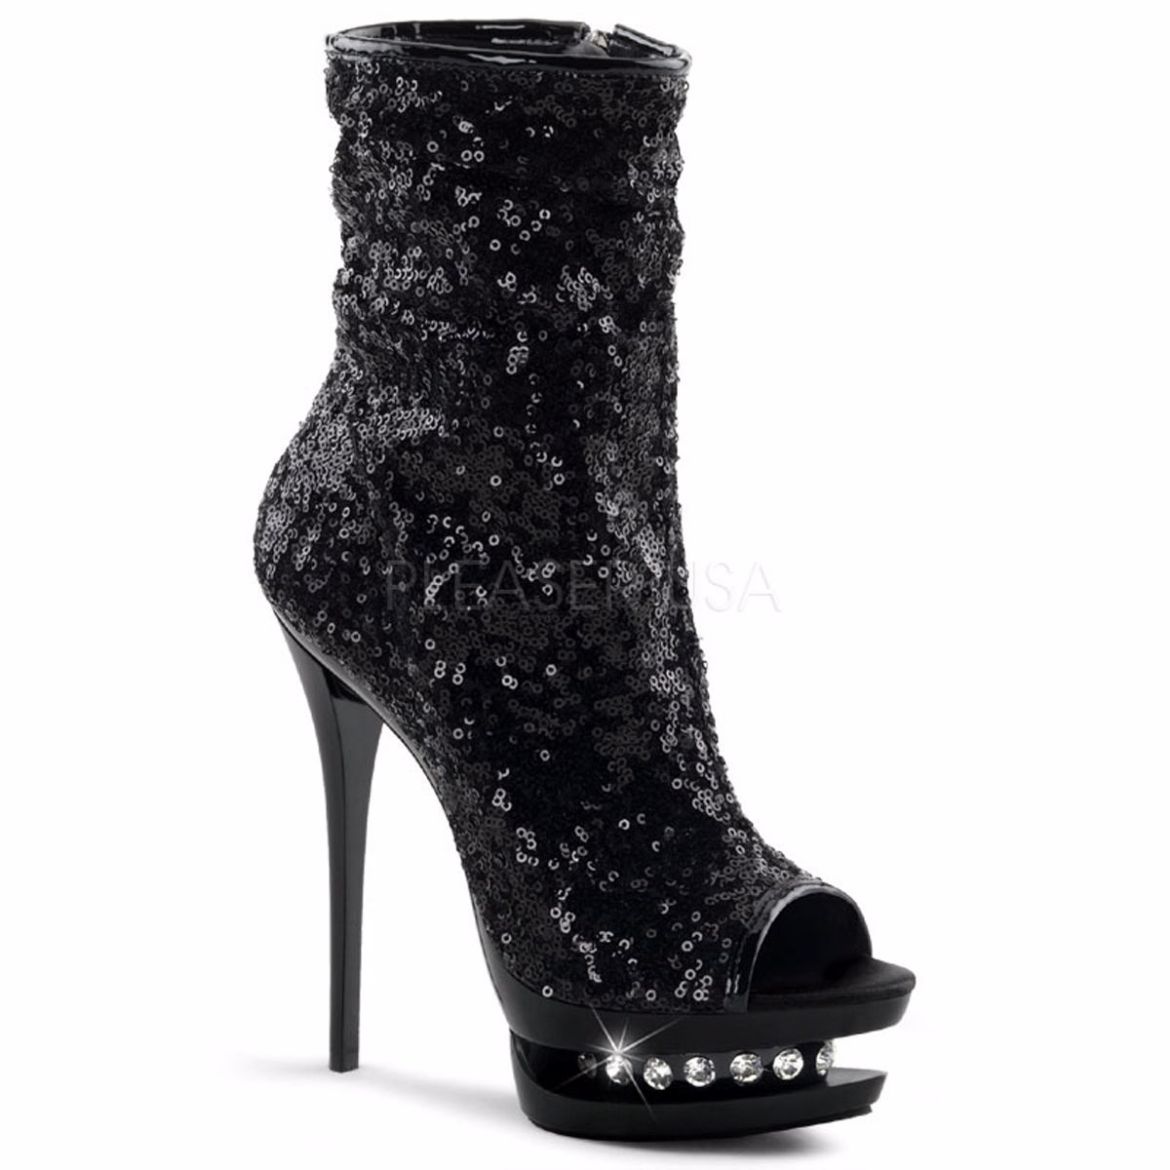 Product image of Pleaser Blondie-R-1008 Black Sequins/Black, 6 inch (15.2 cm) Heel, 1 1/2 inch (3.8 cm) Platform Ankle Boot